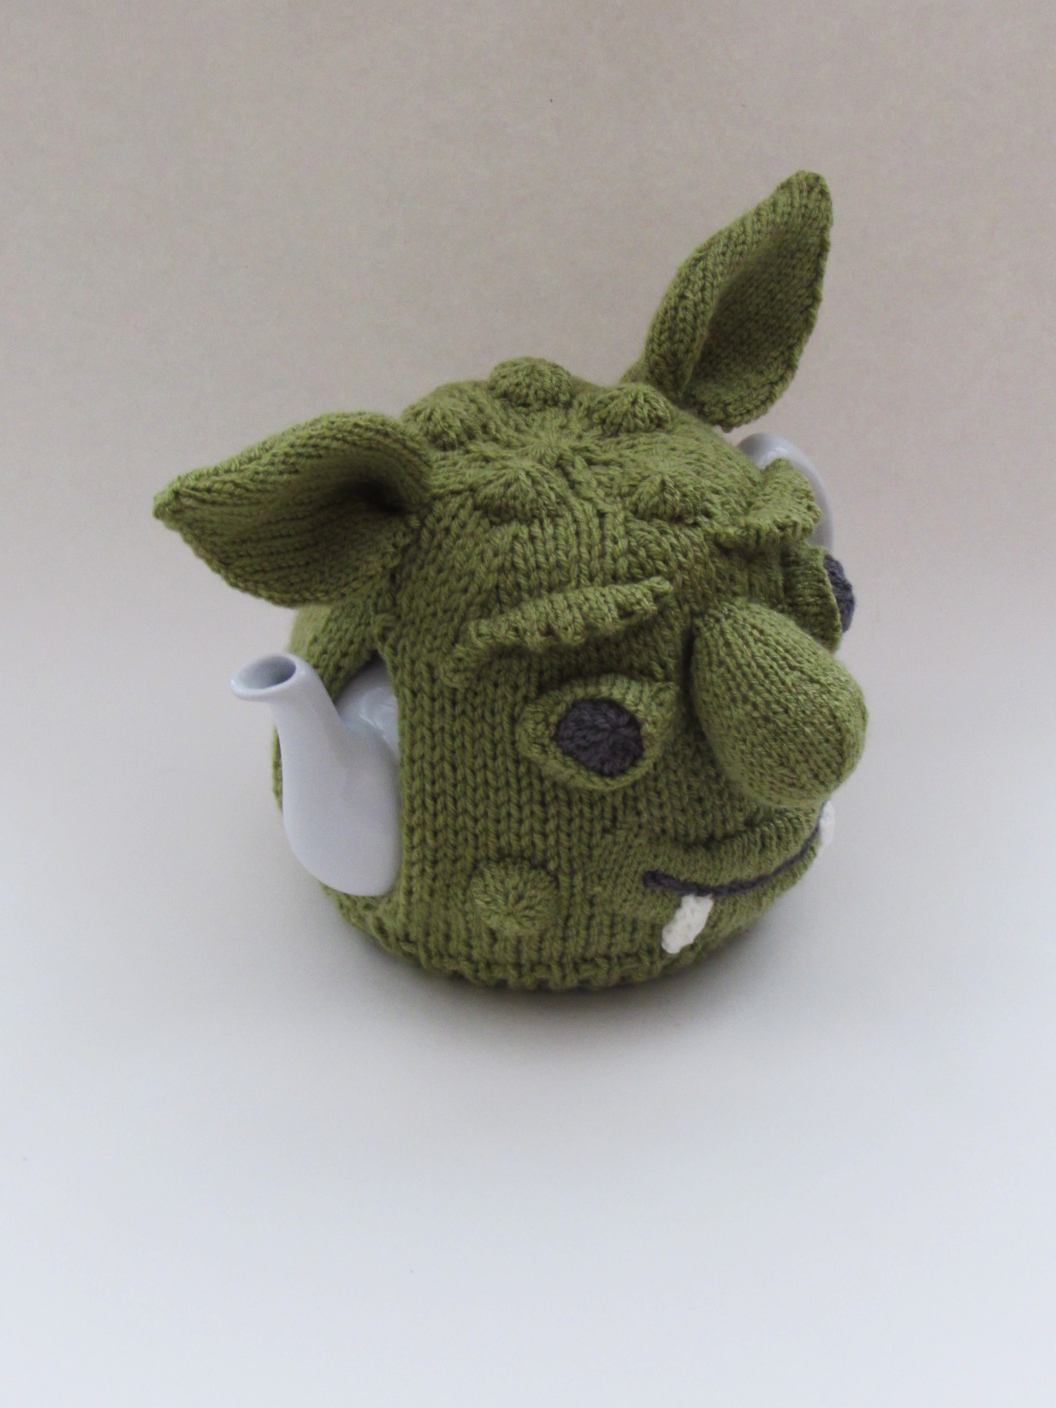 Goblin Head knitting pattern